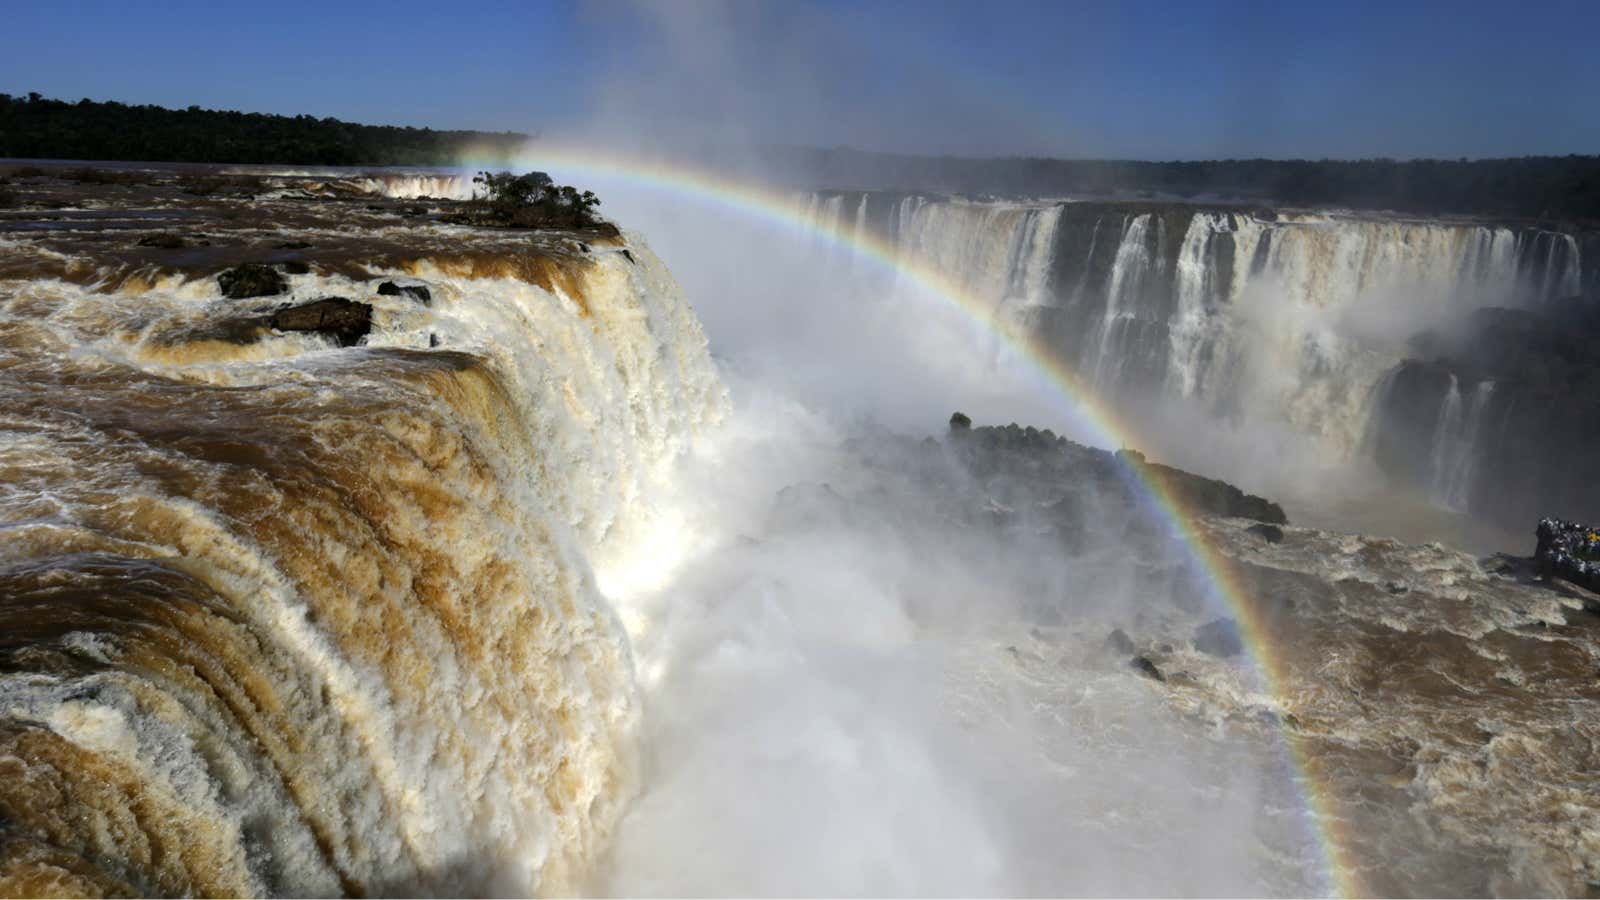 The border of Brazil and Argentina—the Iguazu Falls.